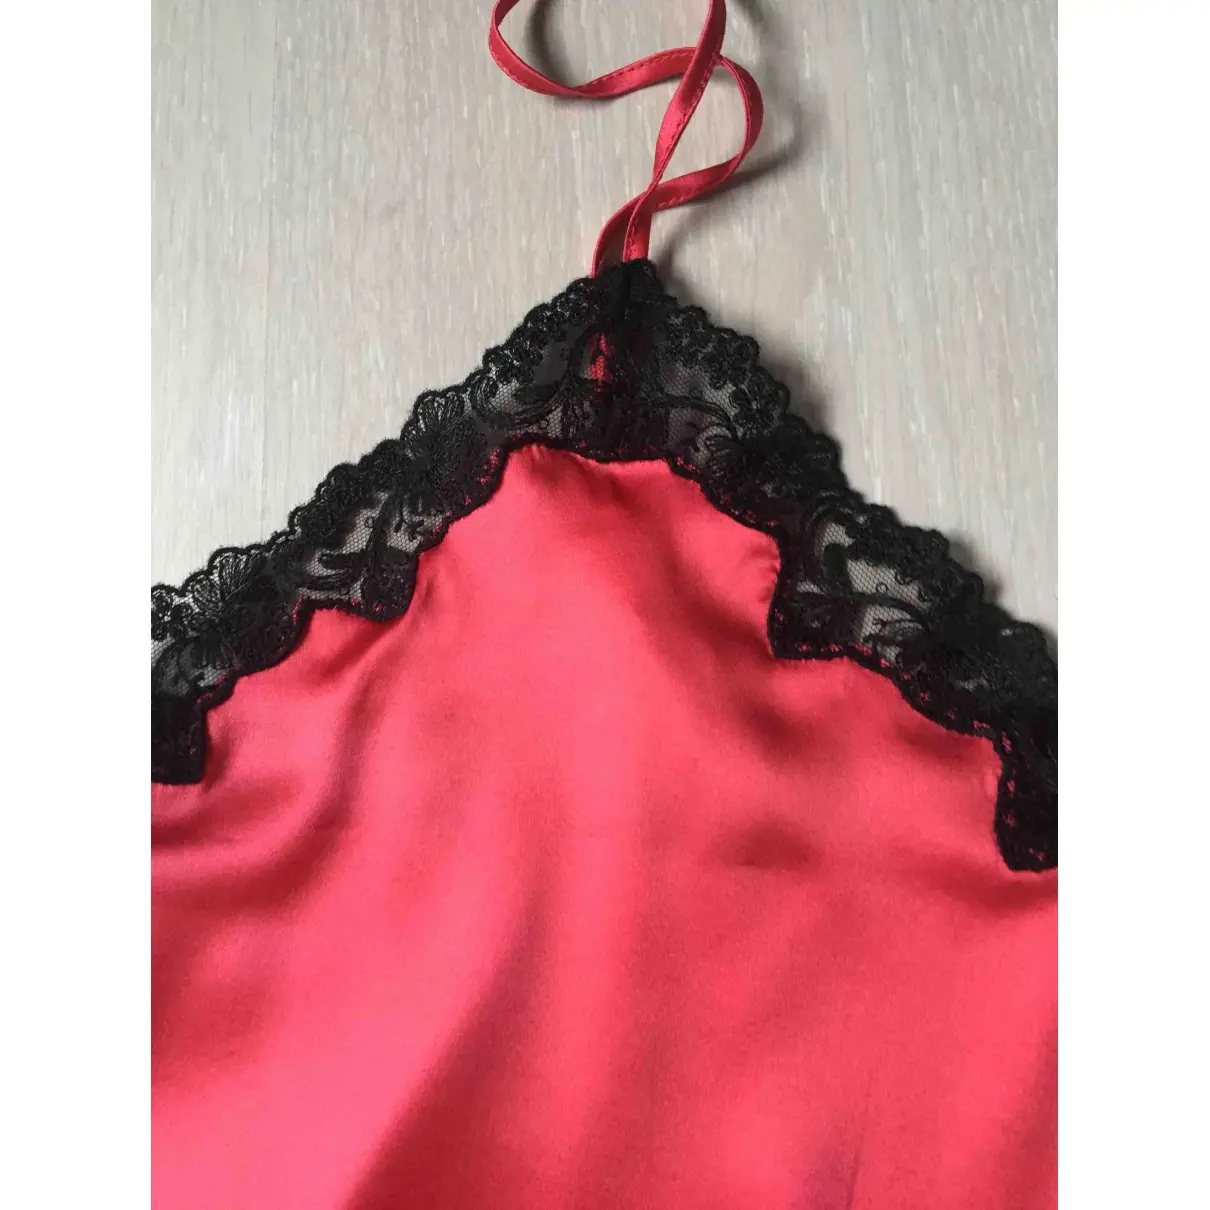 Buy Vannina Vesperini Silk lingerie online